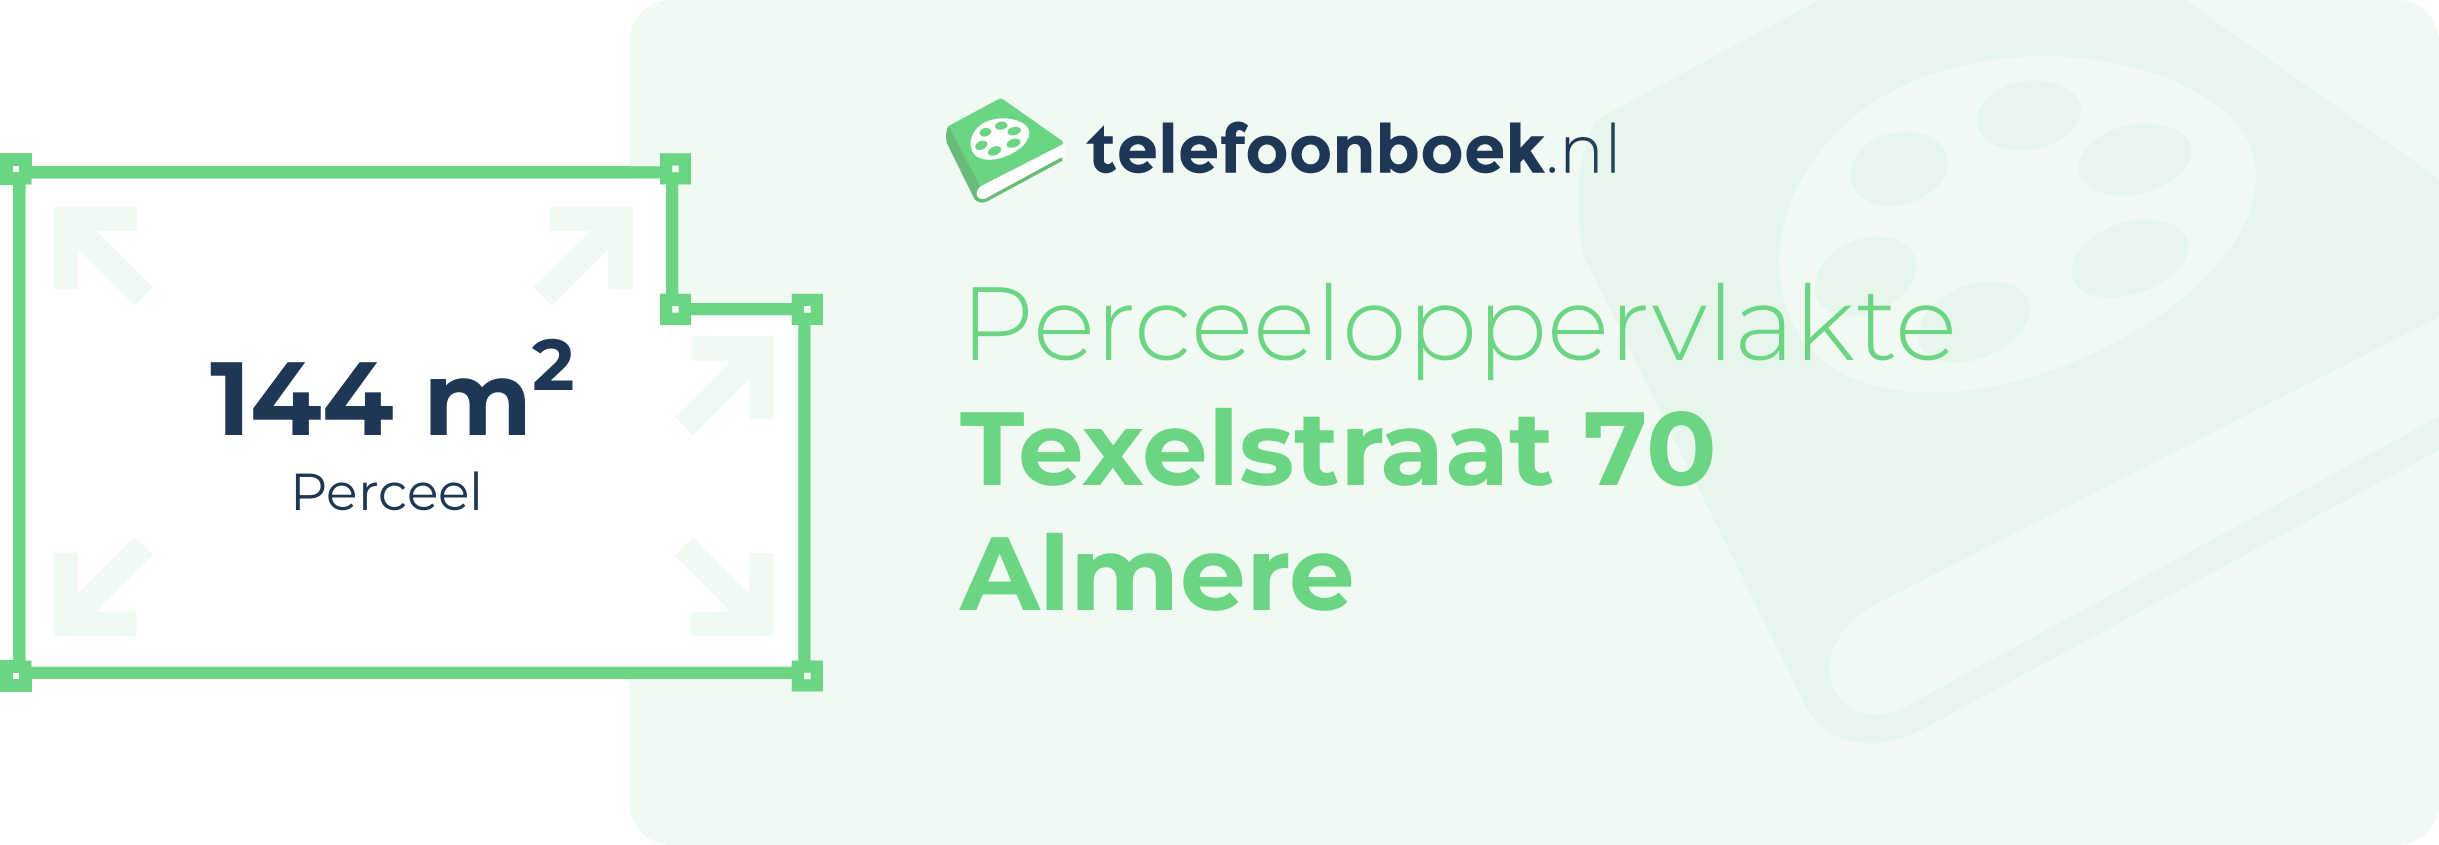 Perceeloppervlakte Texelstraat 70 Almere